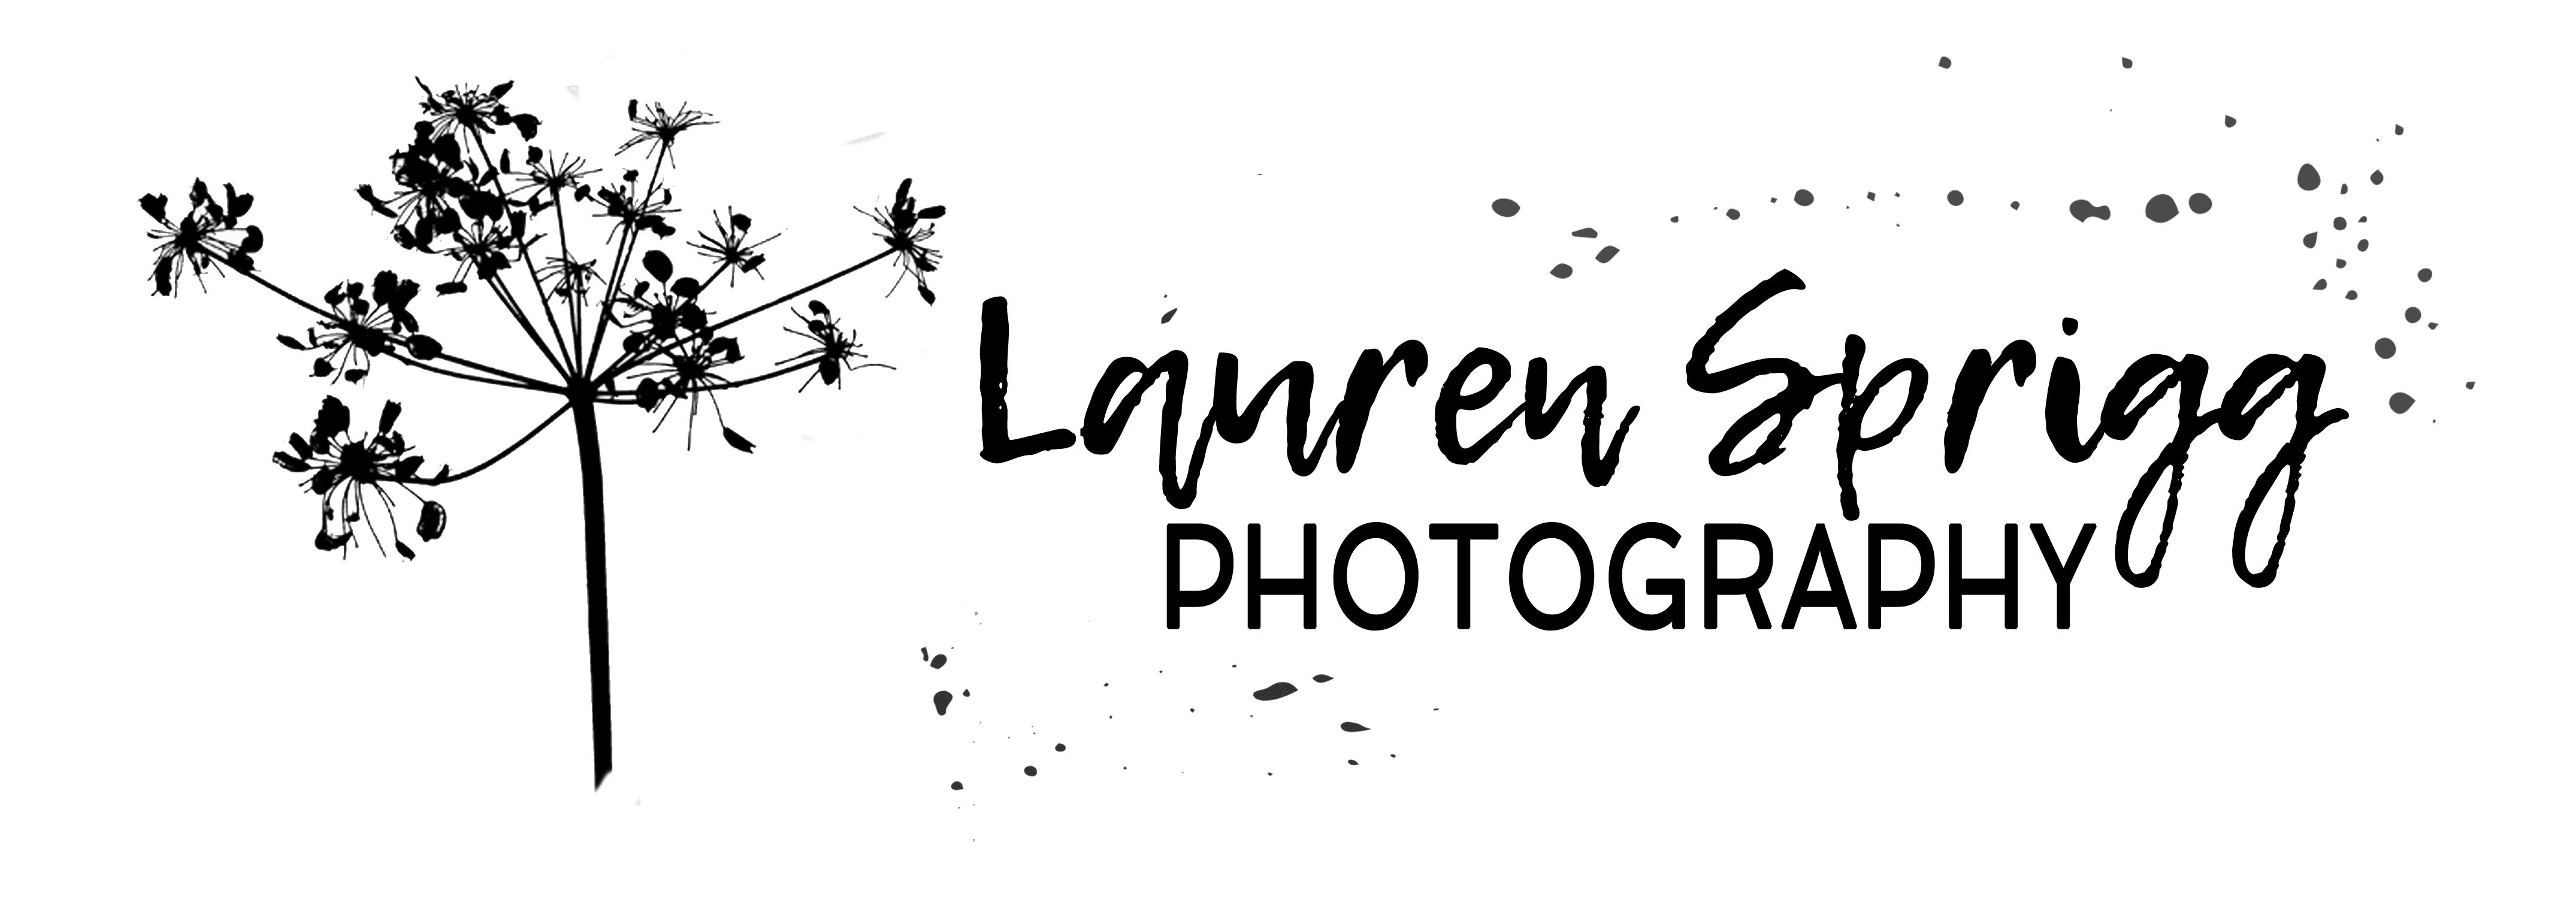 Wedding Photographer - Logo